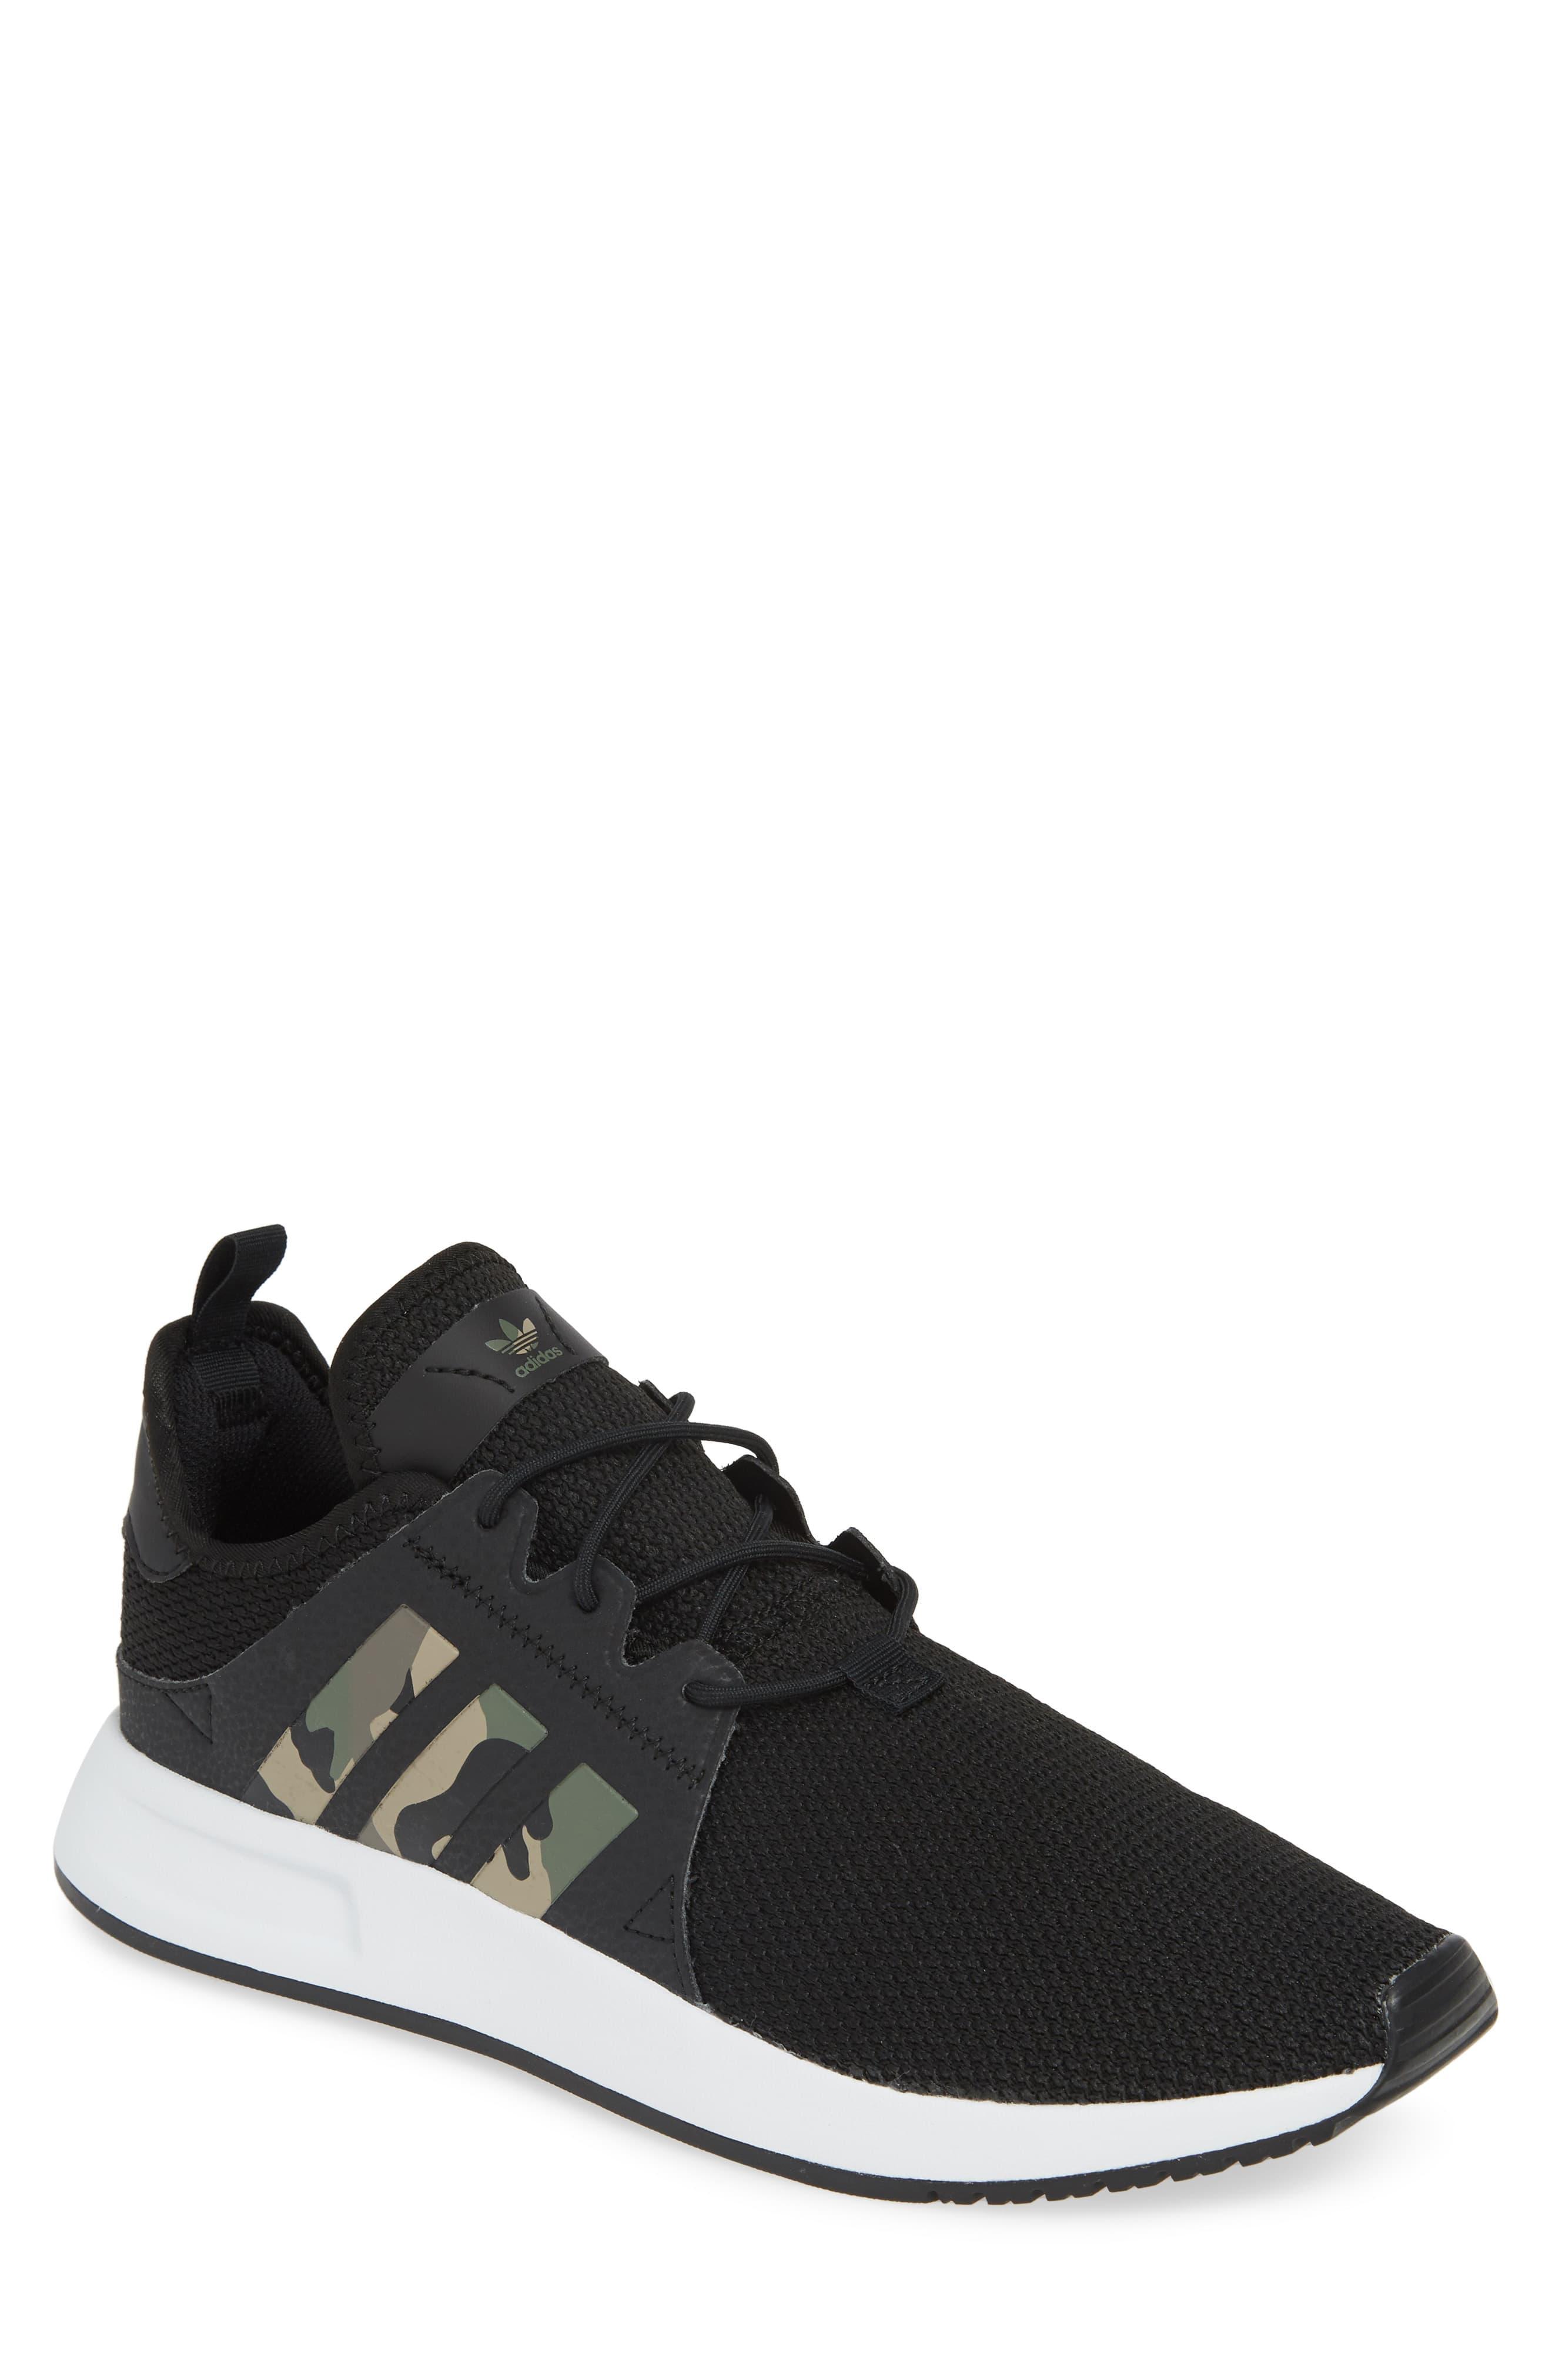 adidas x_plr core black & camo shoes